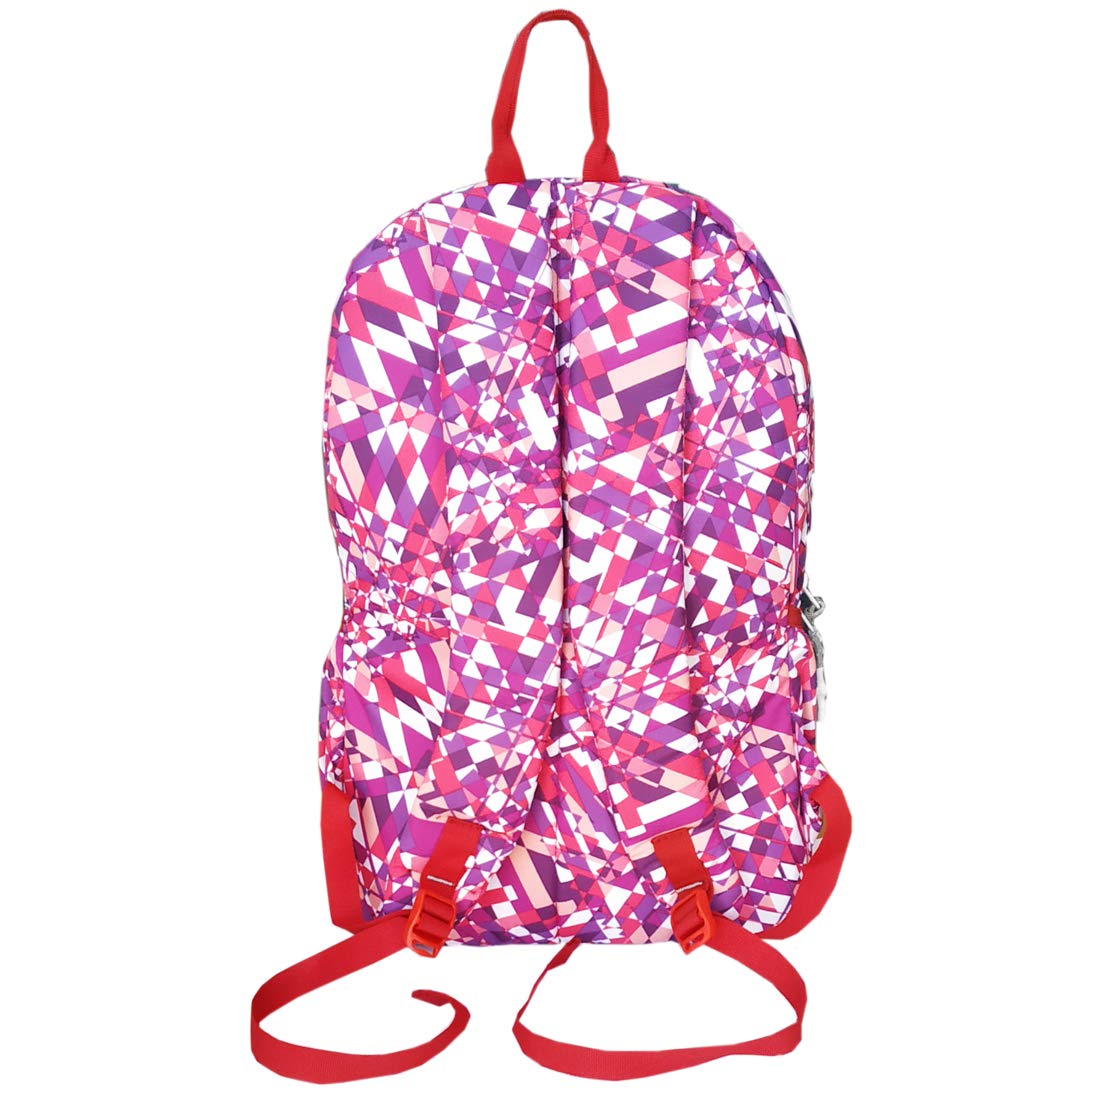 Prokick 30 Ltrs Lite Weight Waterproof Casual Backpack | School Bag, Pink - Best Price online Prokicksports.com